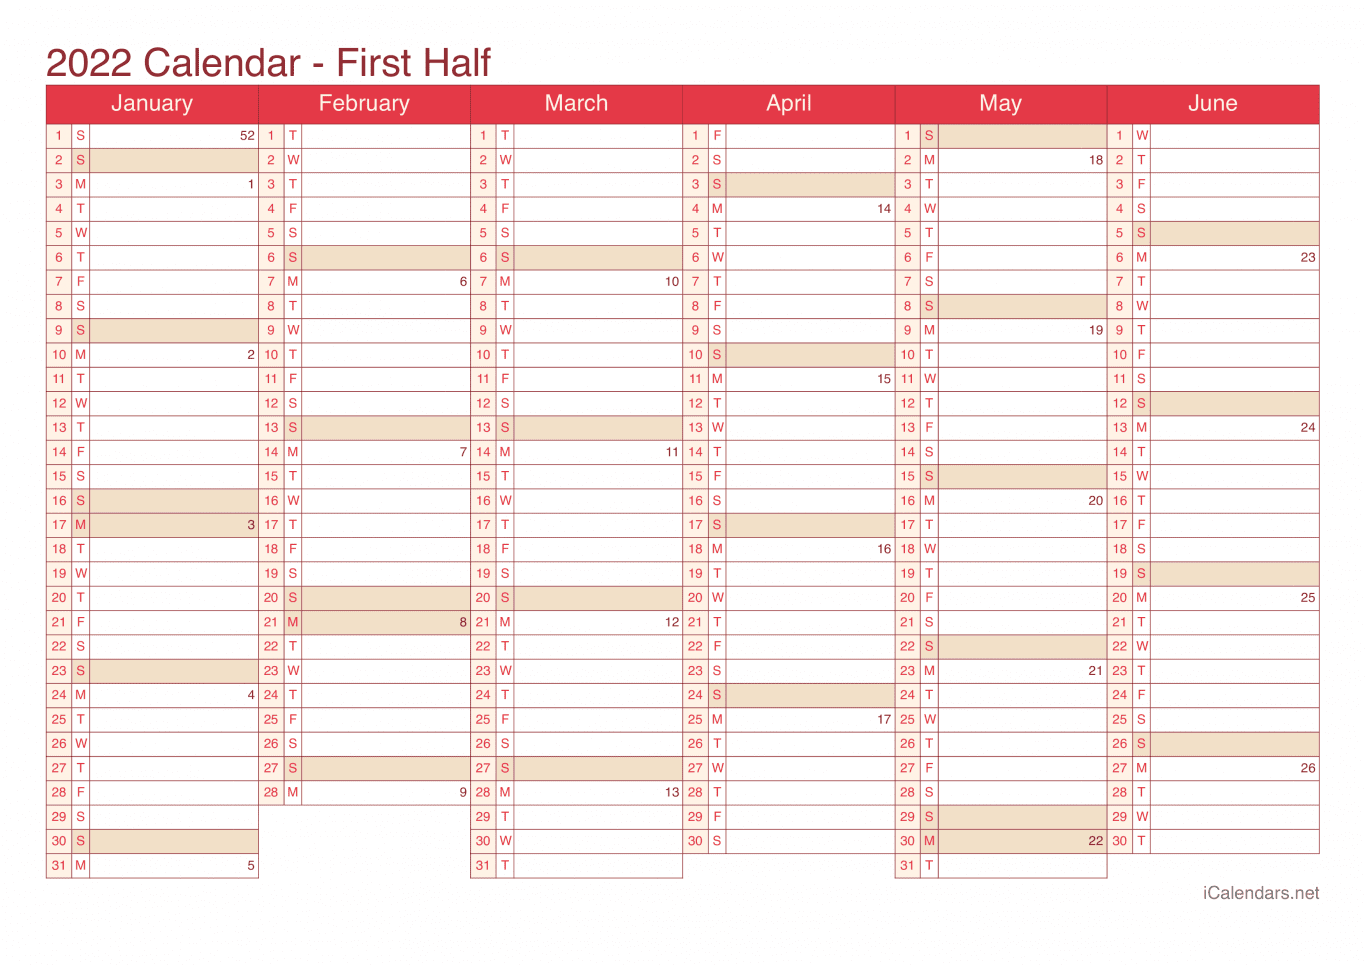 2022 Half year calendar with week numbers - Cherry